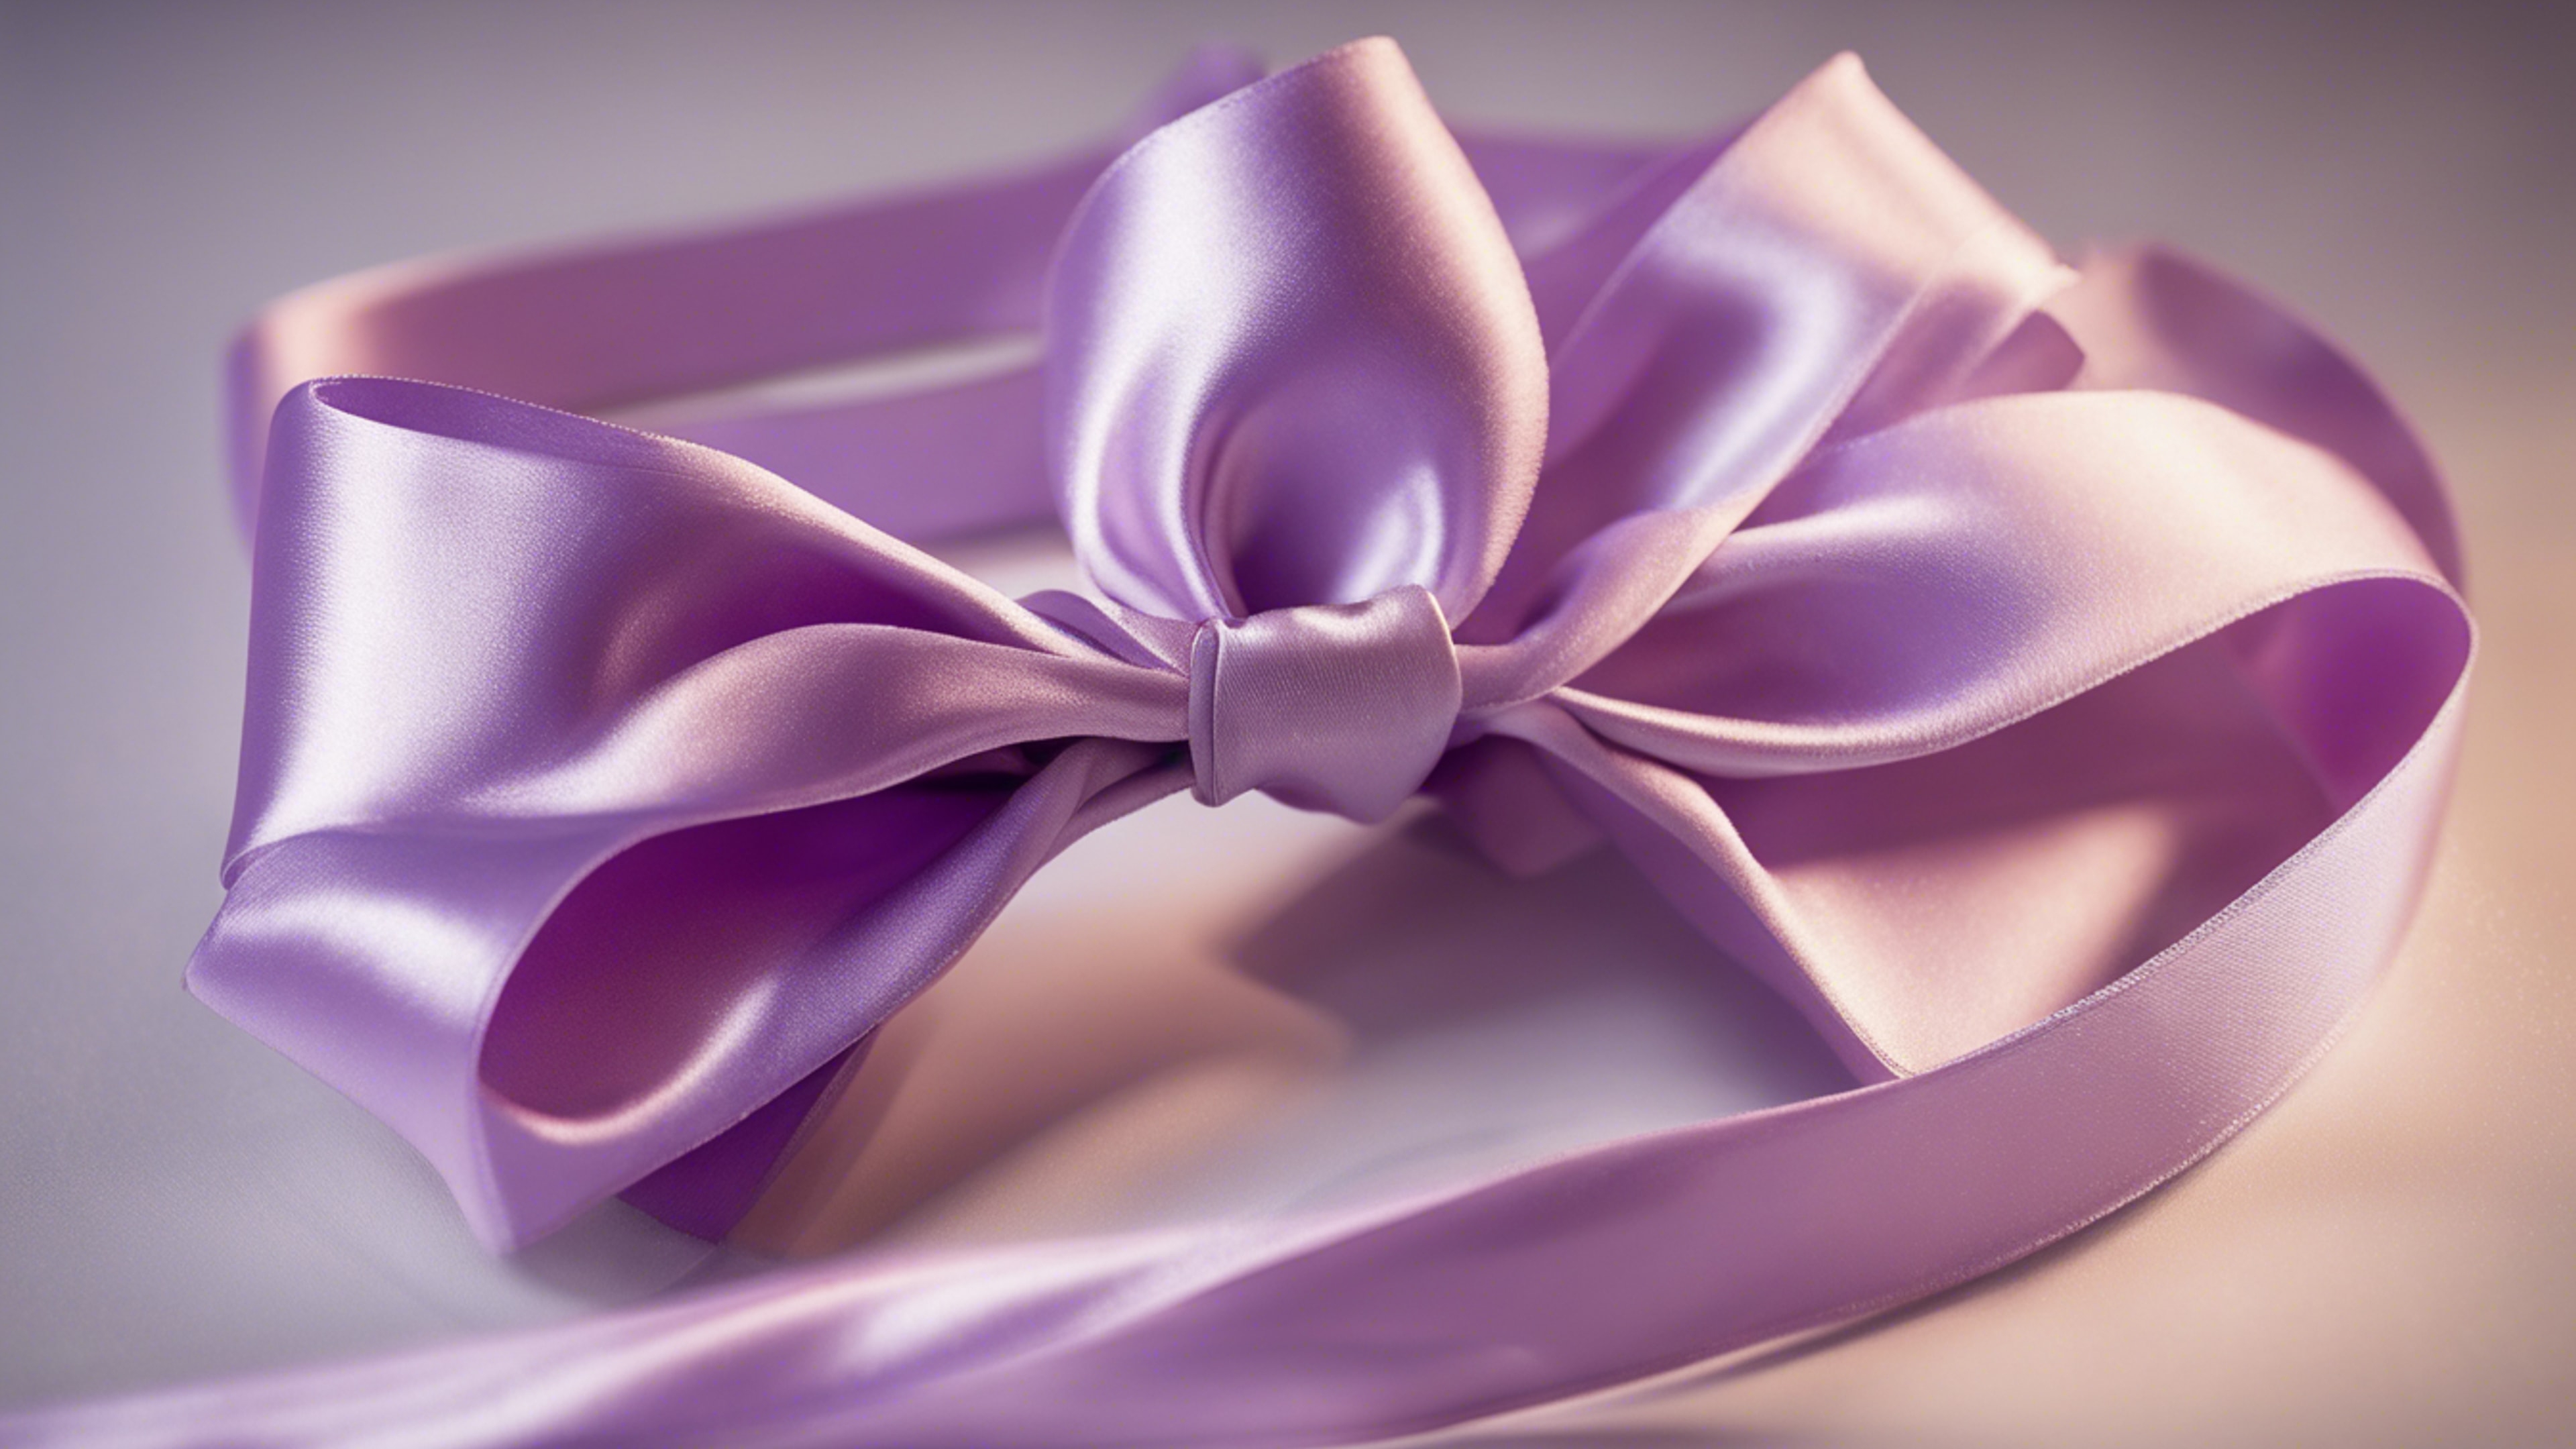 A light purple satin ribbon tied into an impeccable bow. Hình nền[d13a8a3b072741bda8f5]